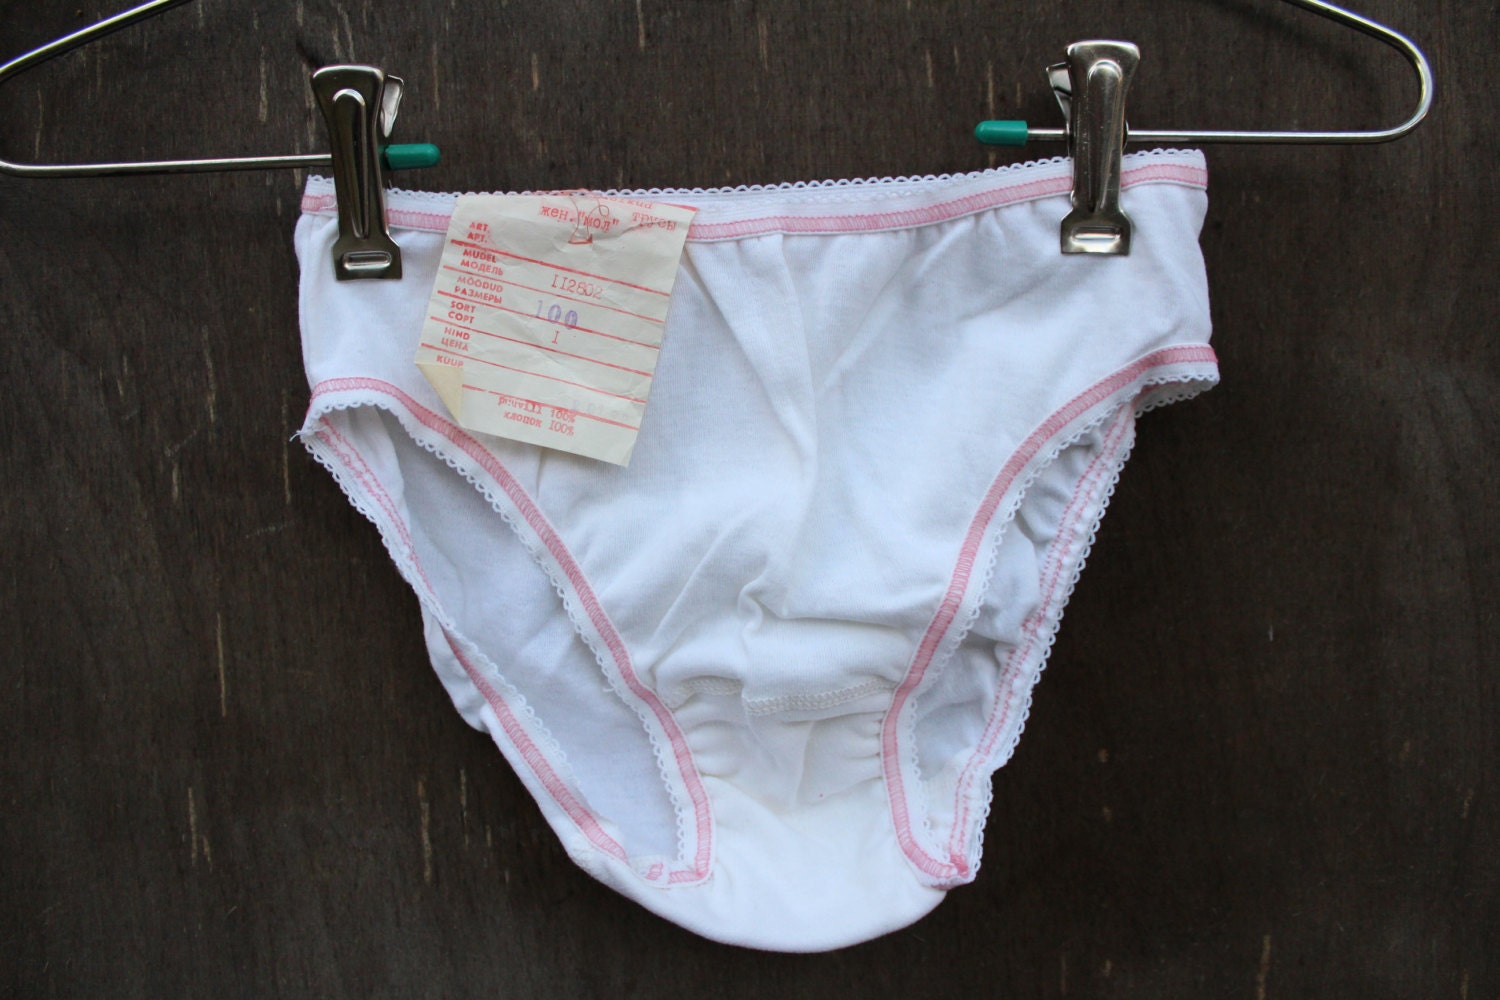 NOS Soviet Teens Cotton Underwear Vintage Russian Panties Etsy